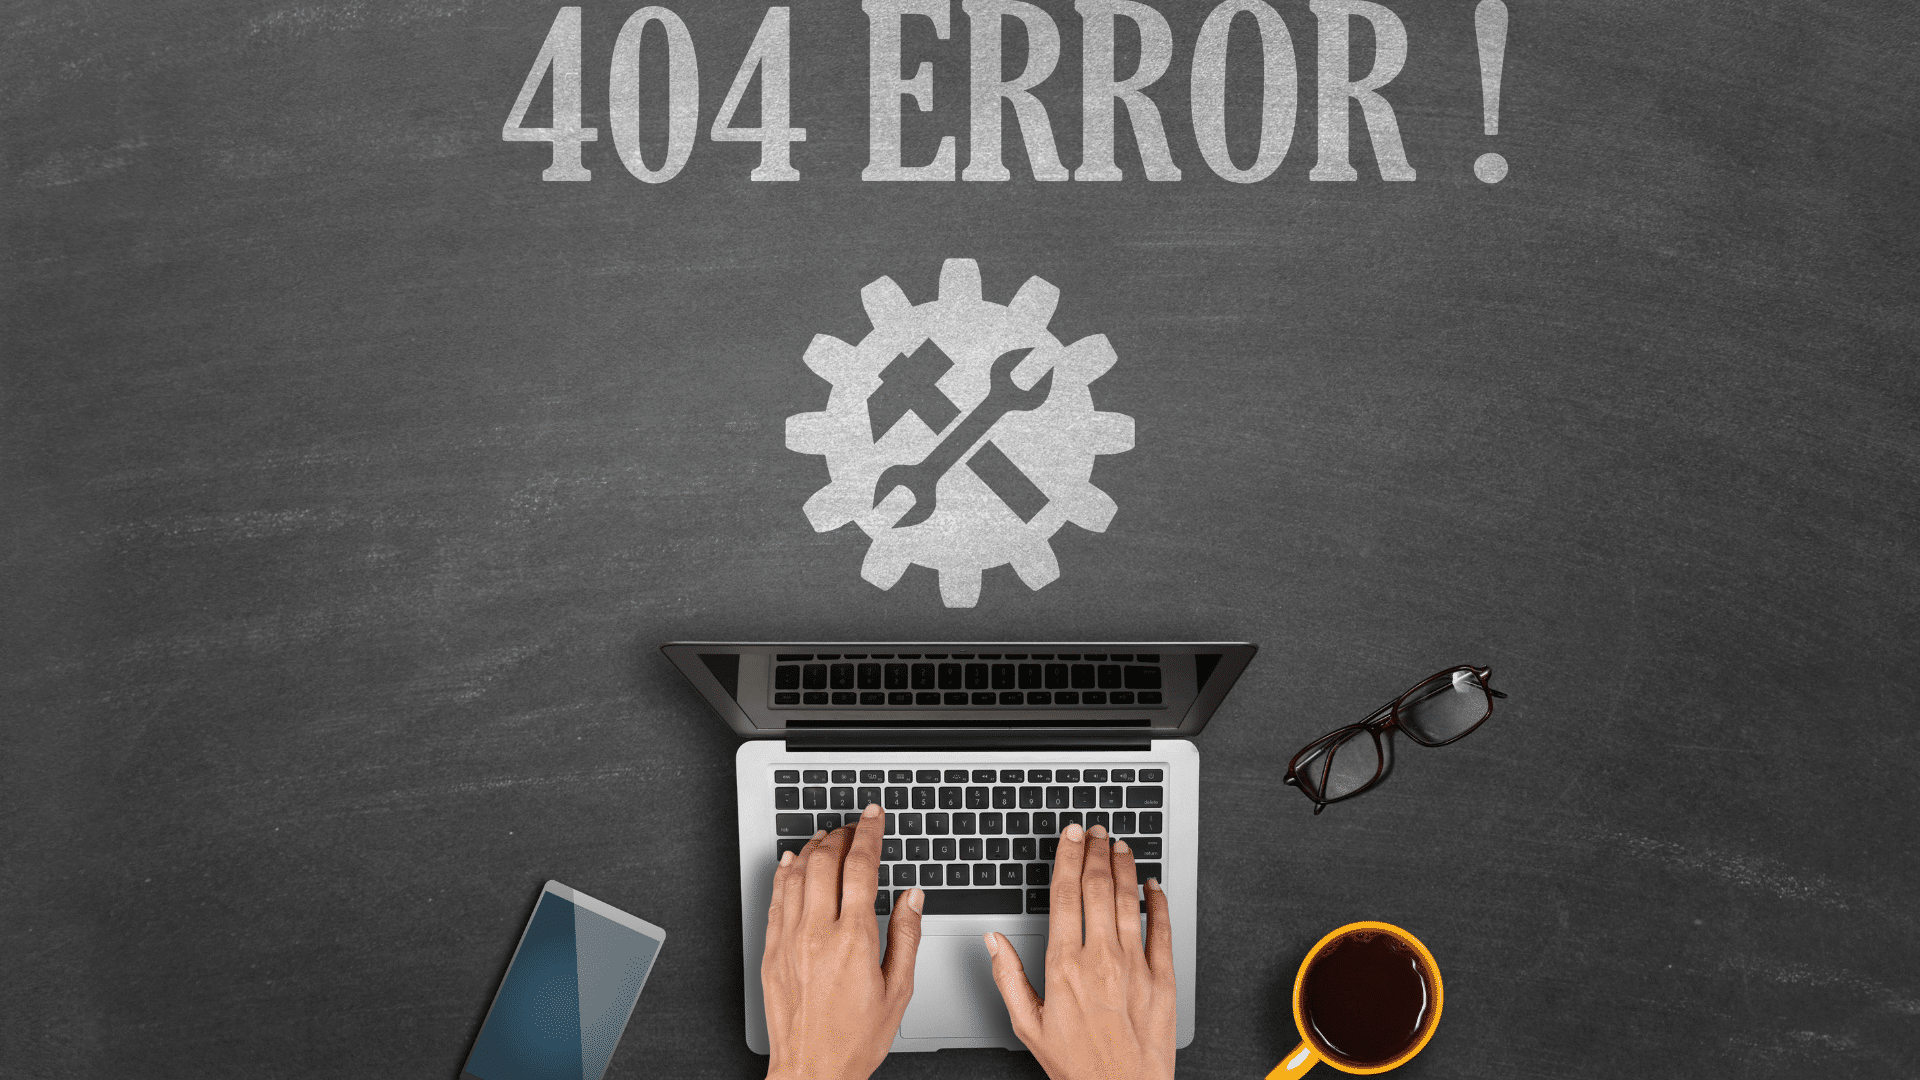 Scritta "404 Error!"